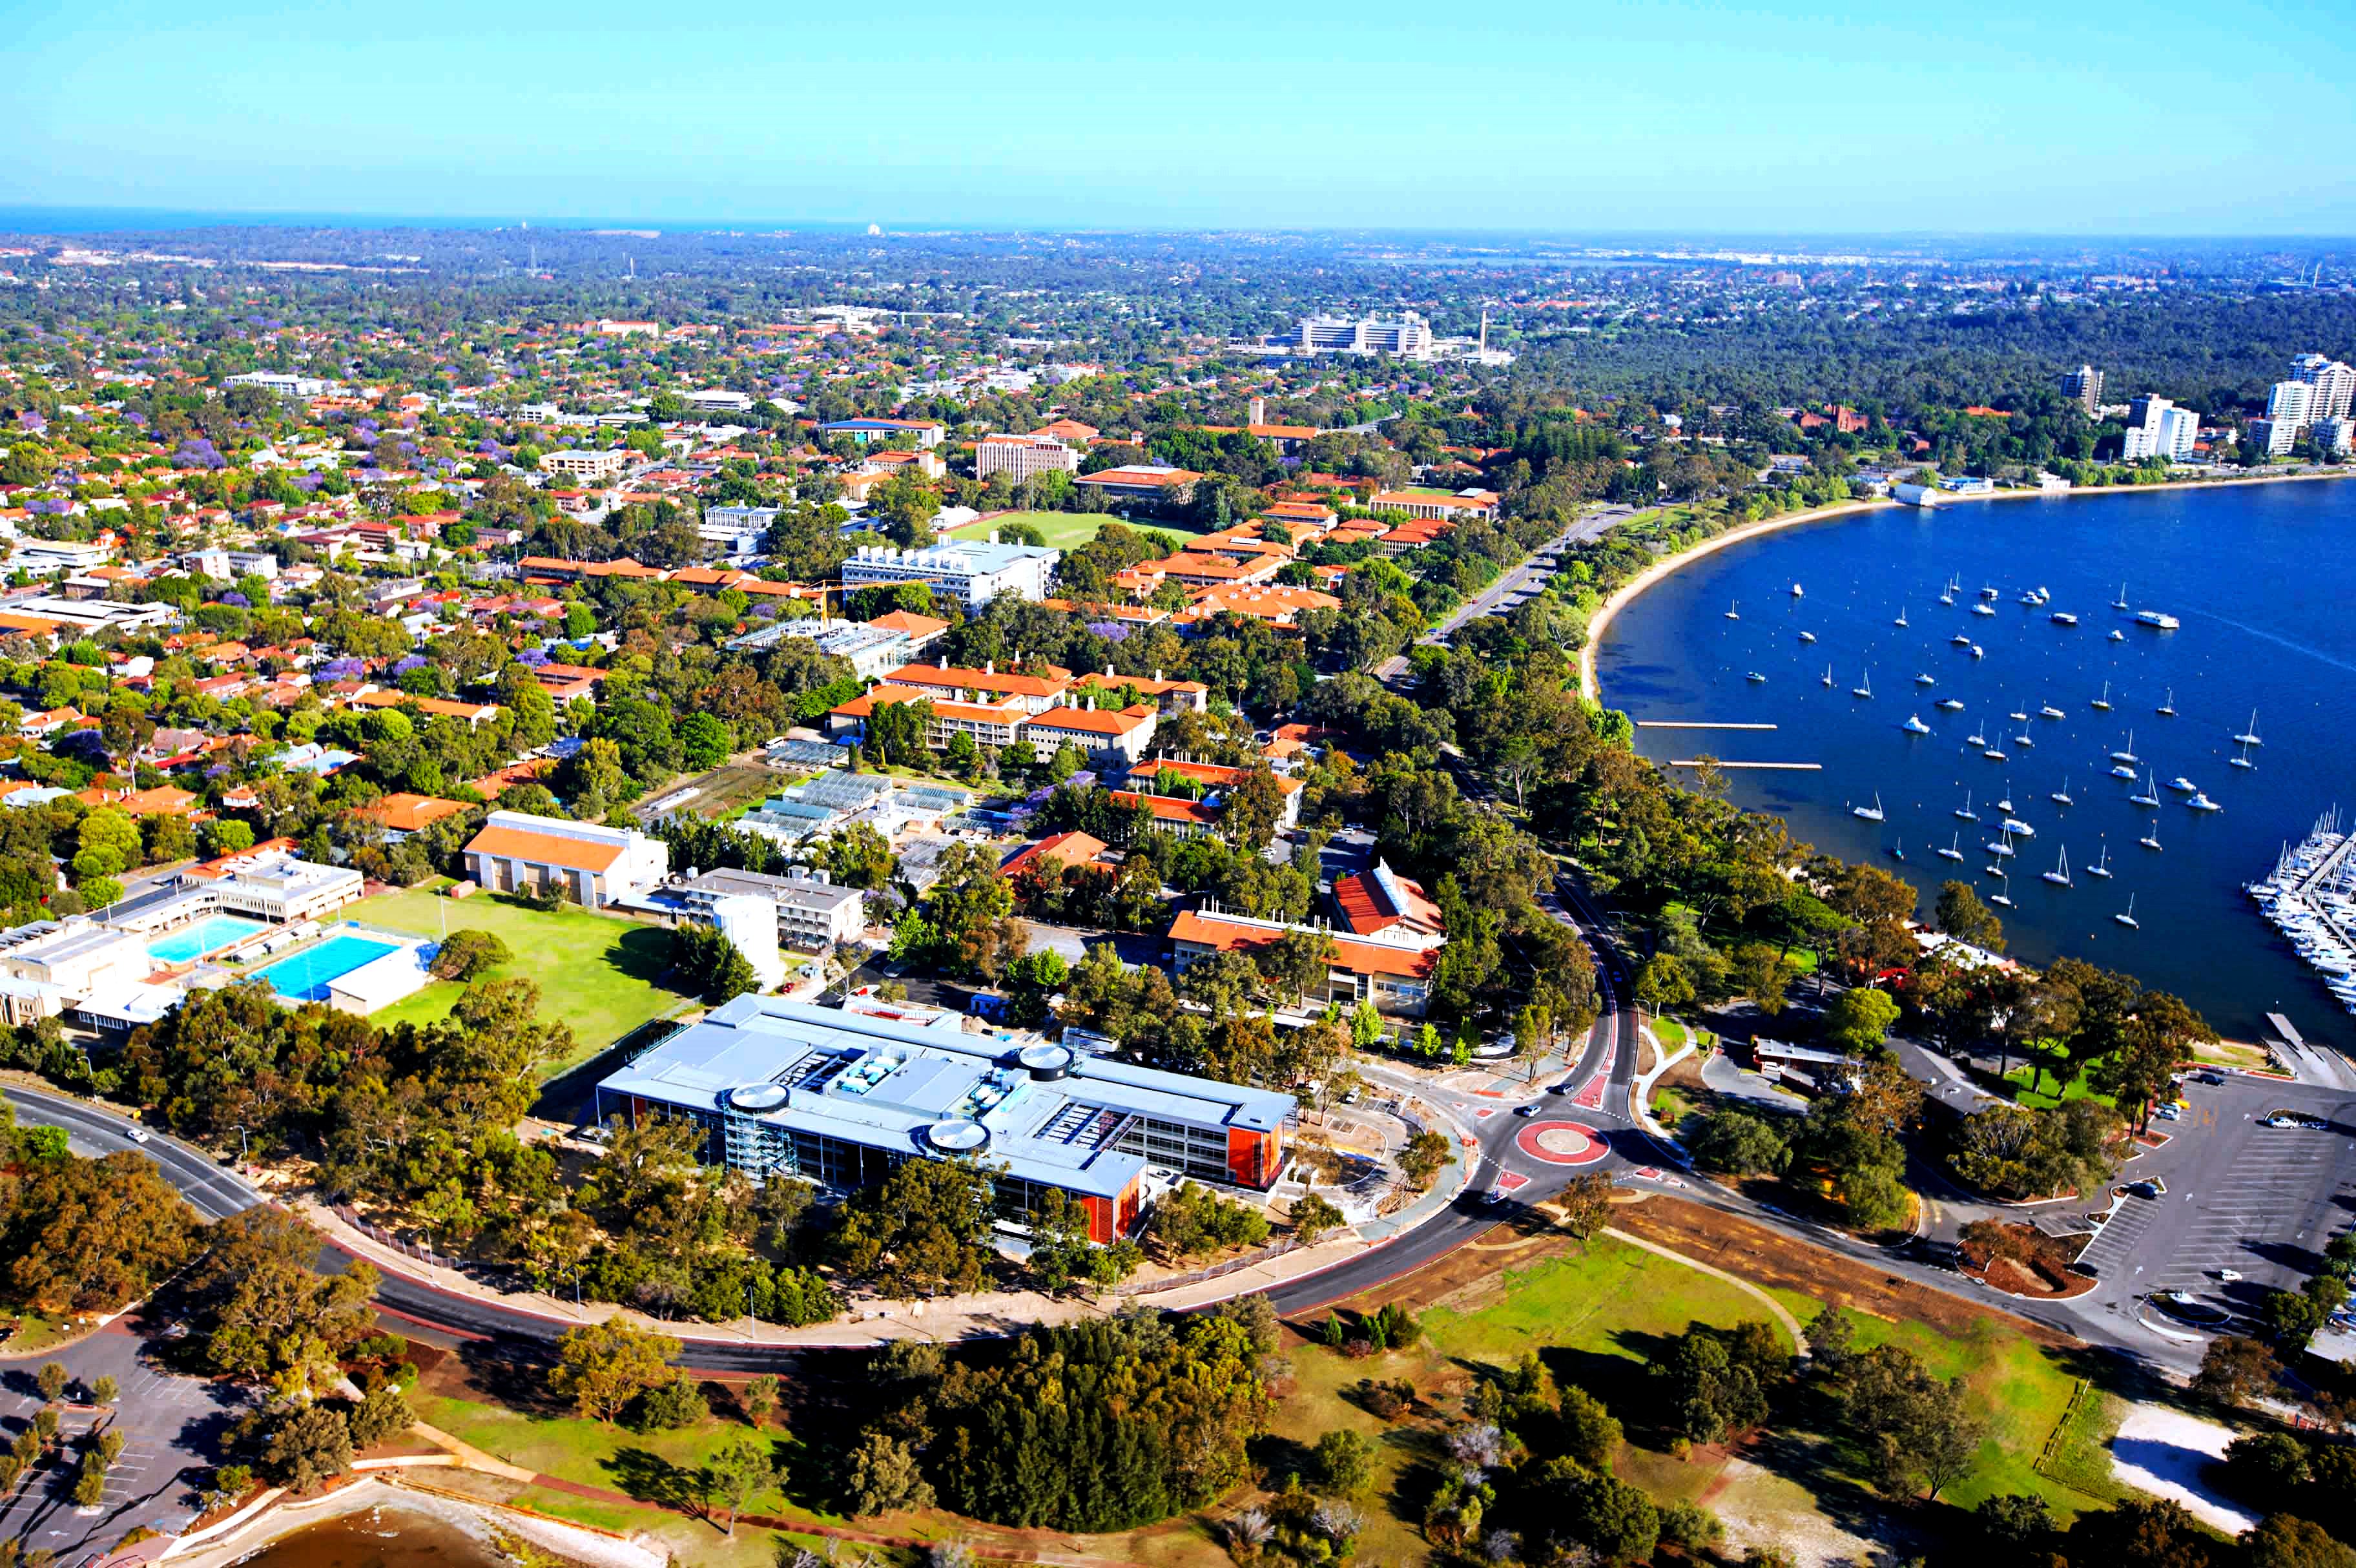 University of Western Australia campus